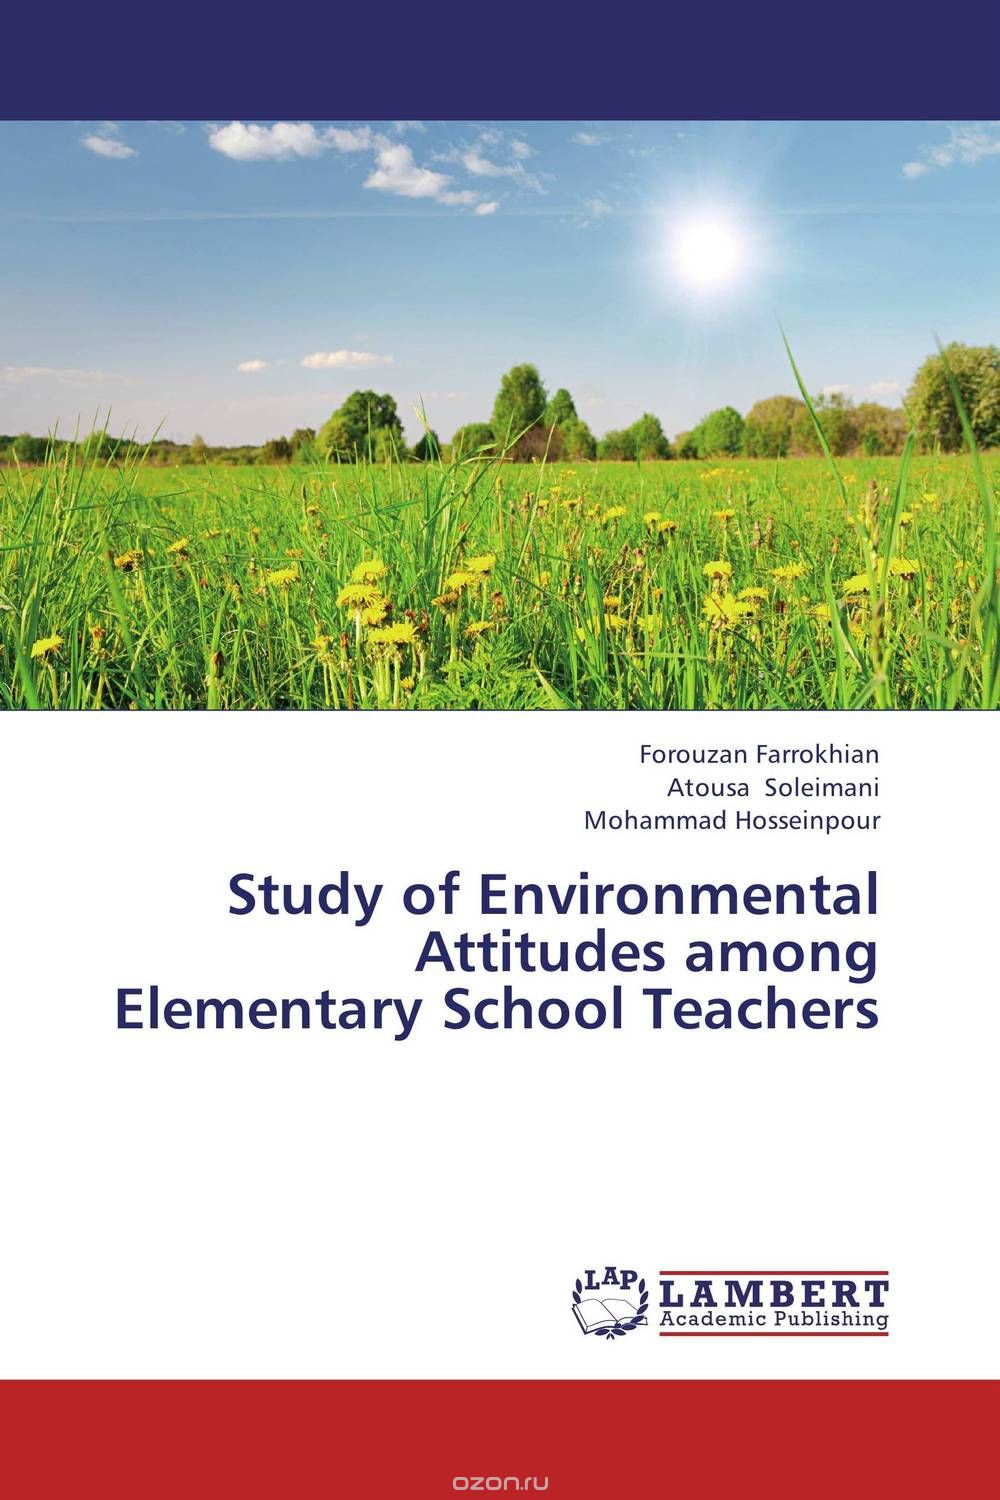 Скачать книгу "Study of Environmental Attitudes among Elementary School Teachers"